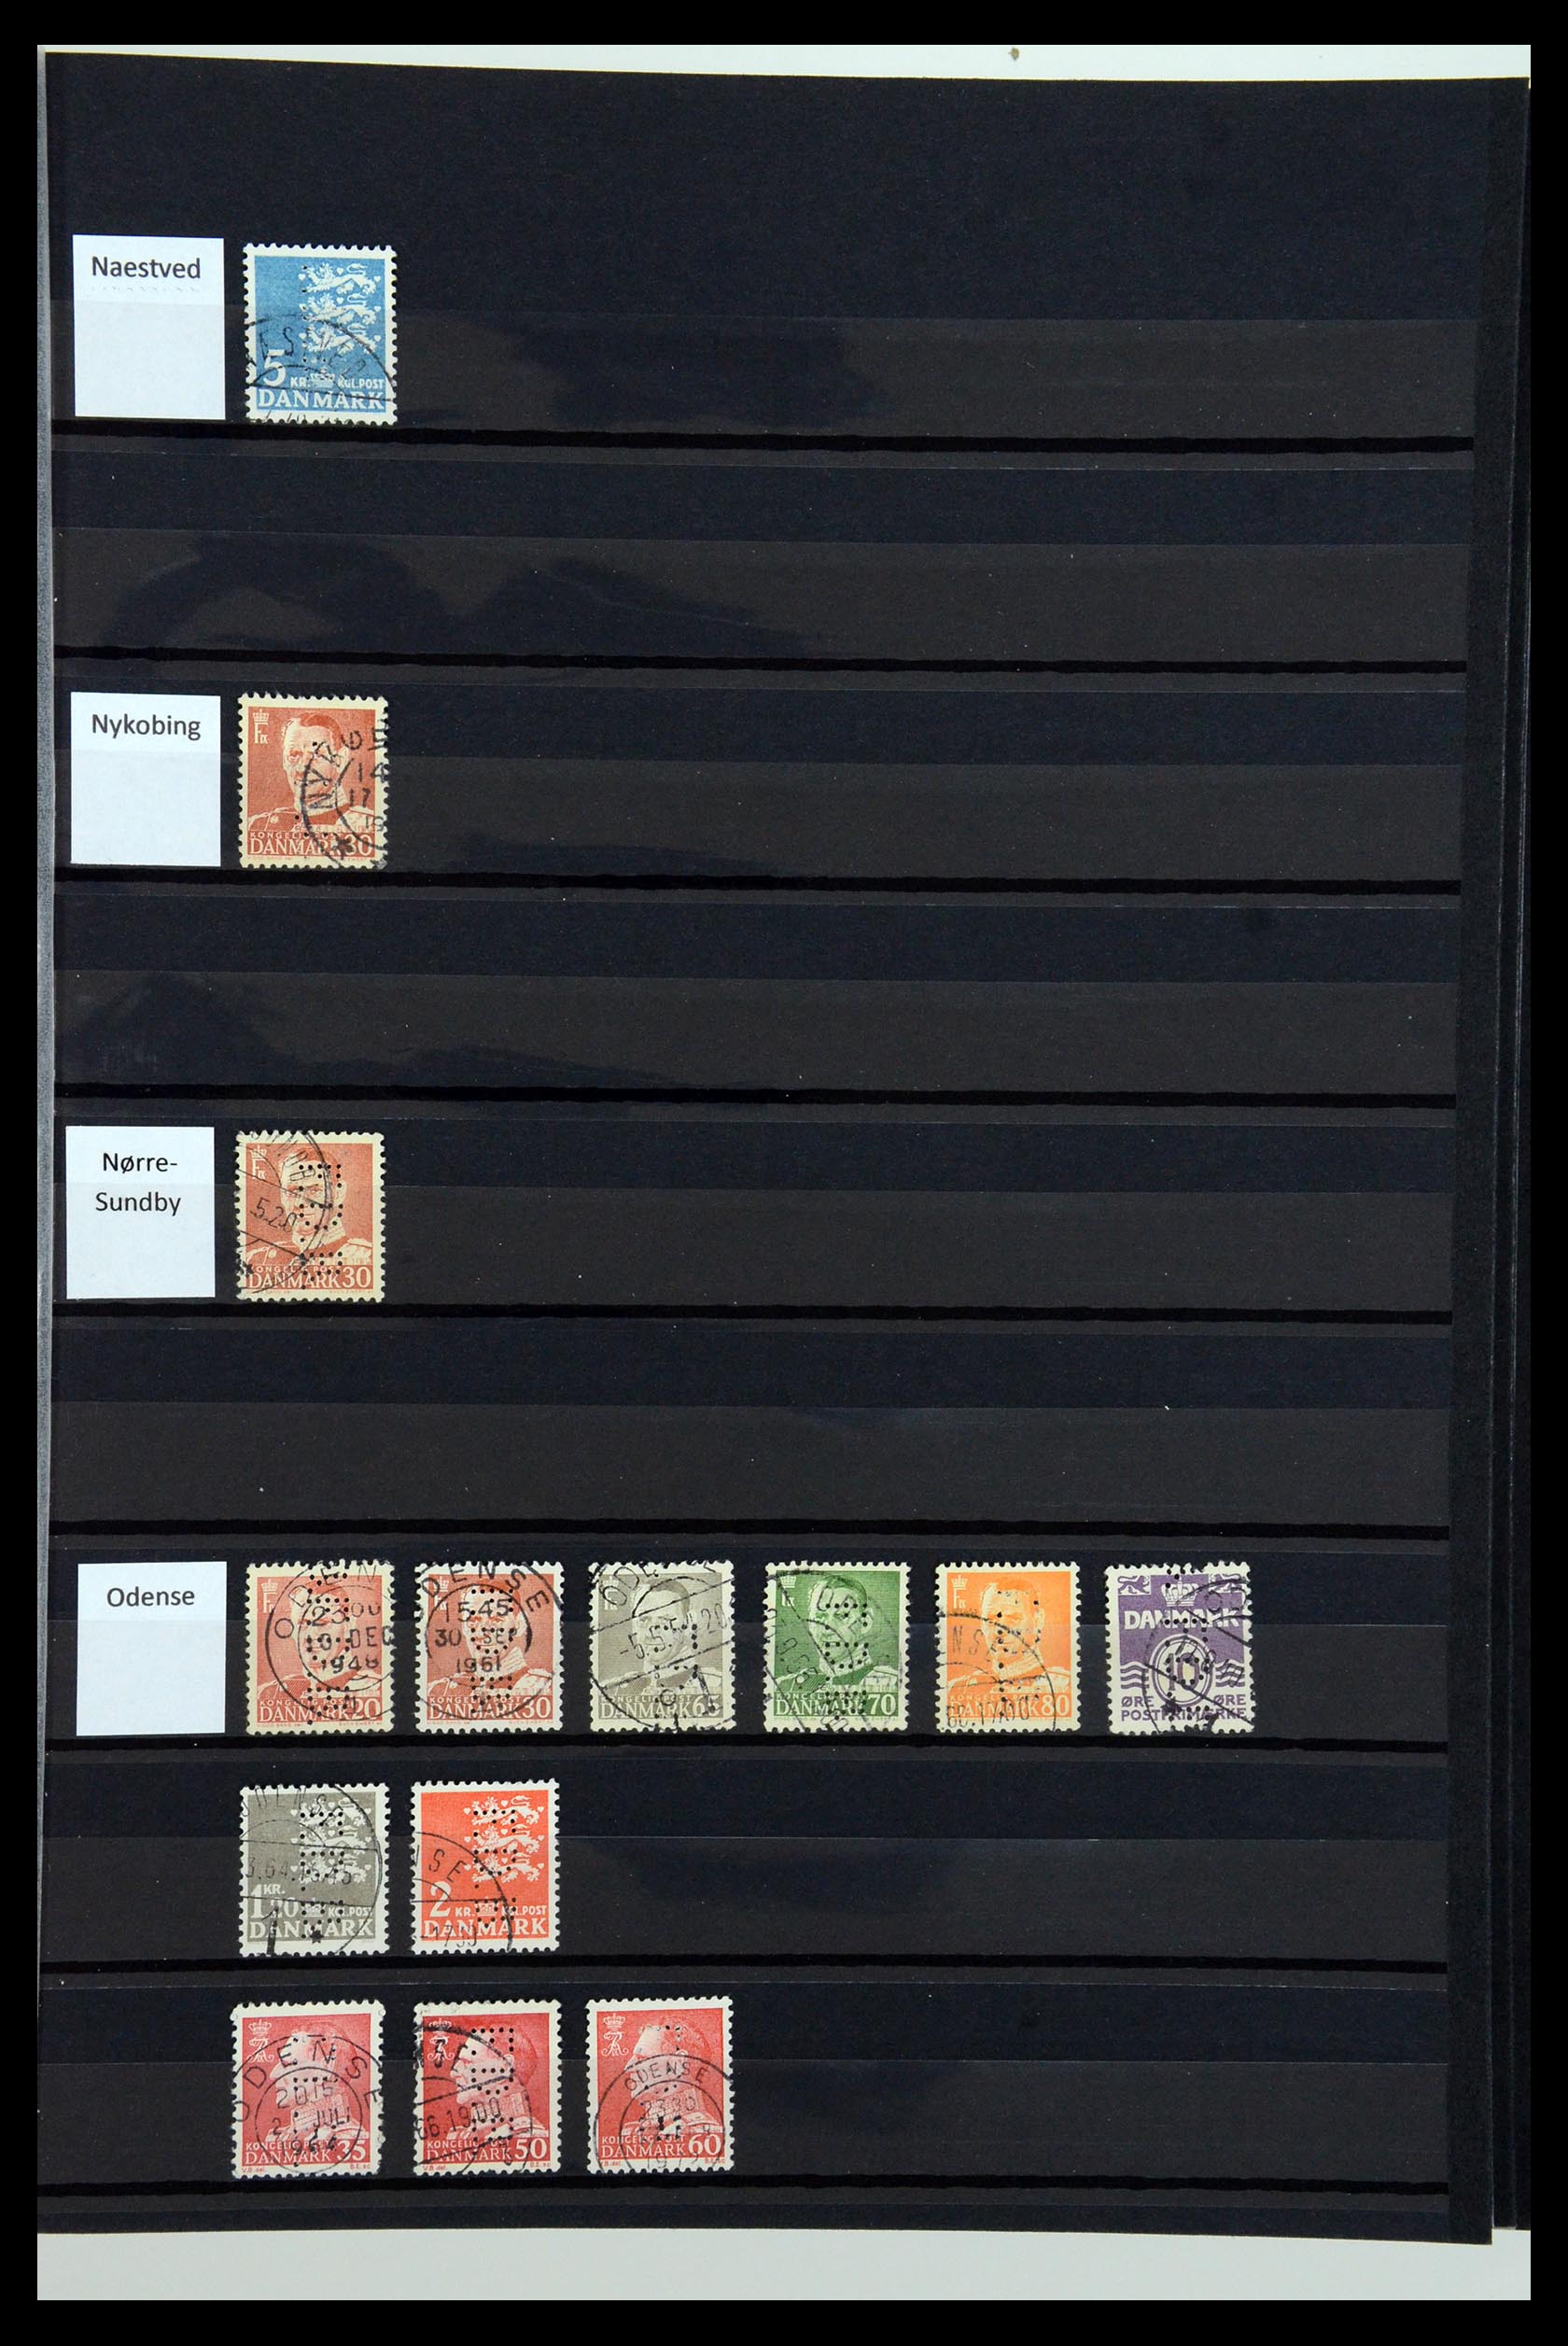 36396 071 - Stamp collection 36396 Denmark perfins.